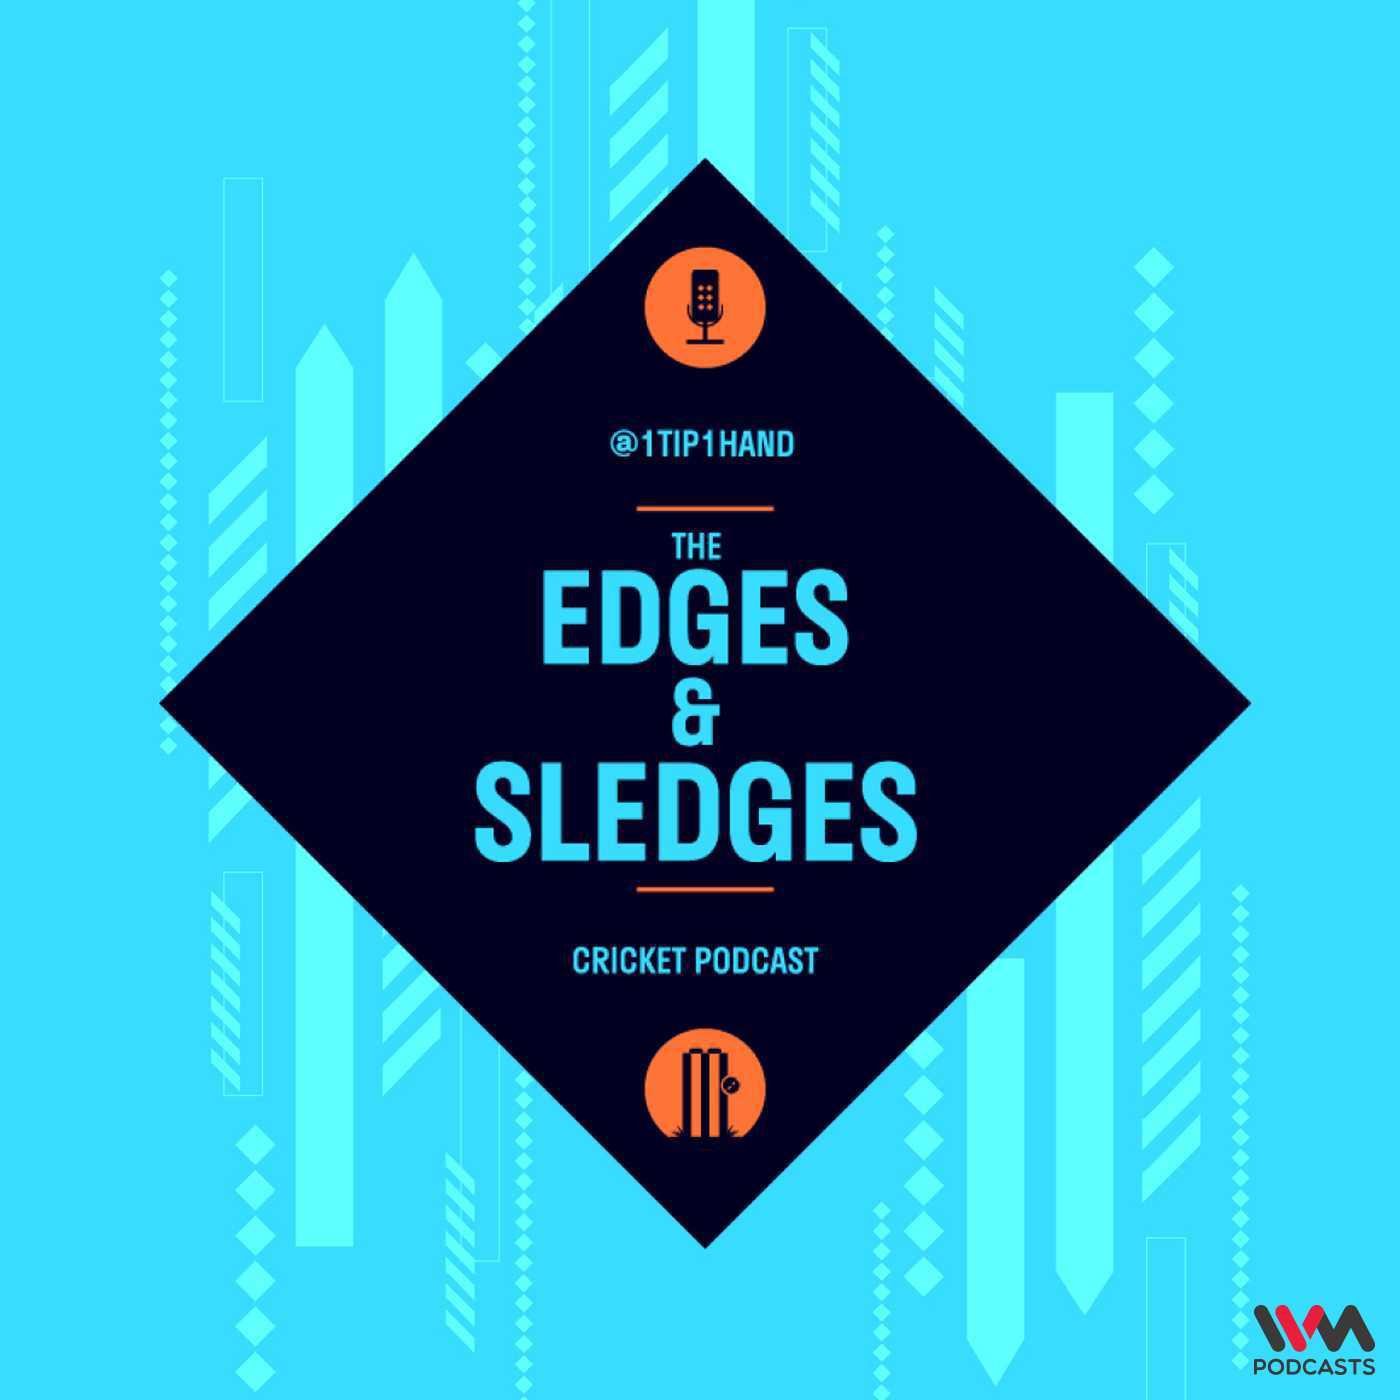 The Edges & Sledges Cricket Podcast